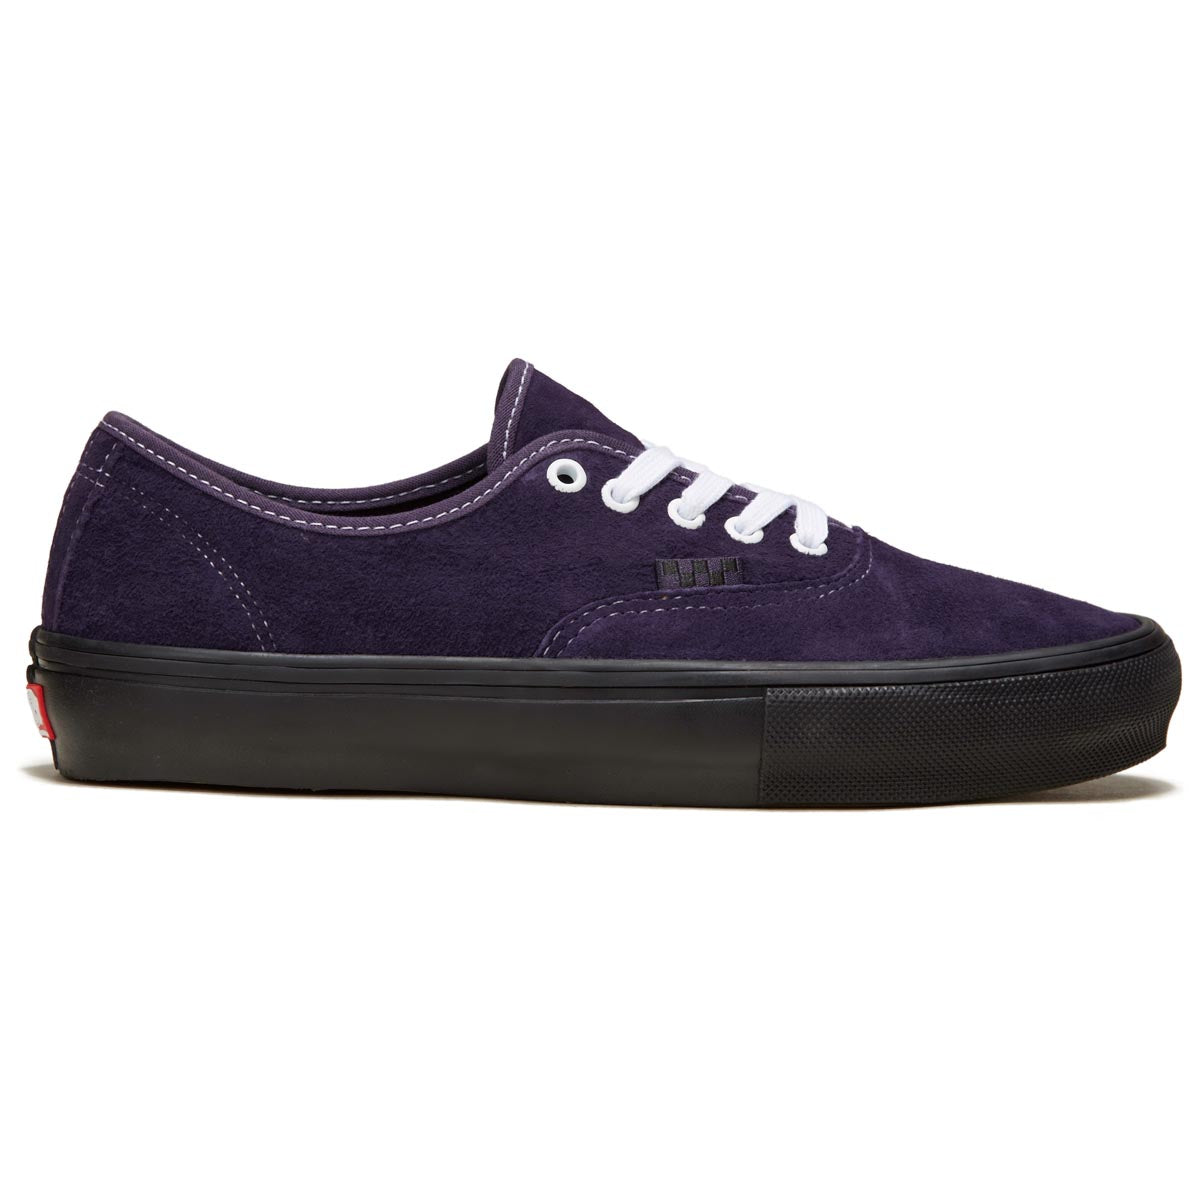 Vans Skate Authentic Shoes - Pig Suede Dark Purple/Black image 1